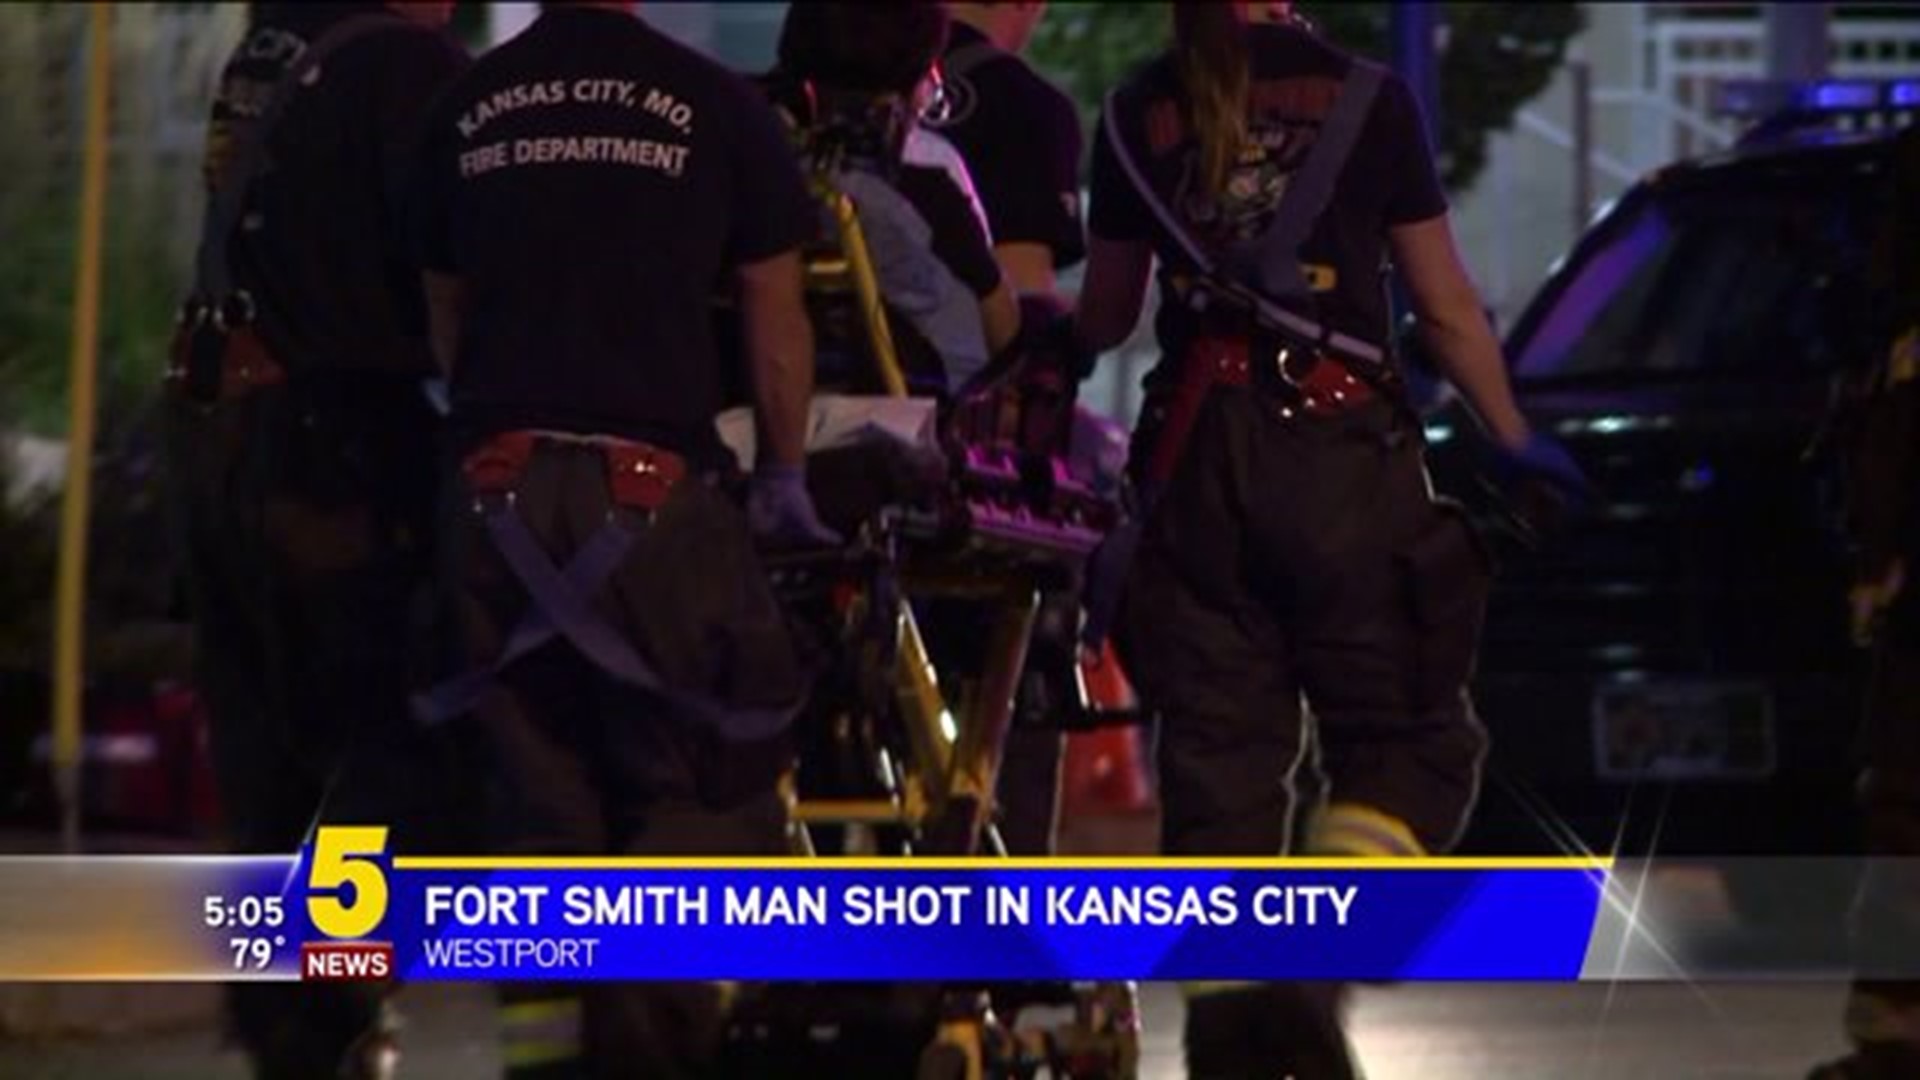 Fort Smith Man Shot In Kansas City